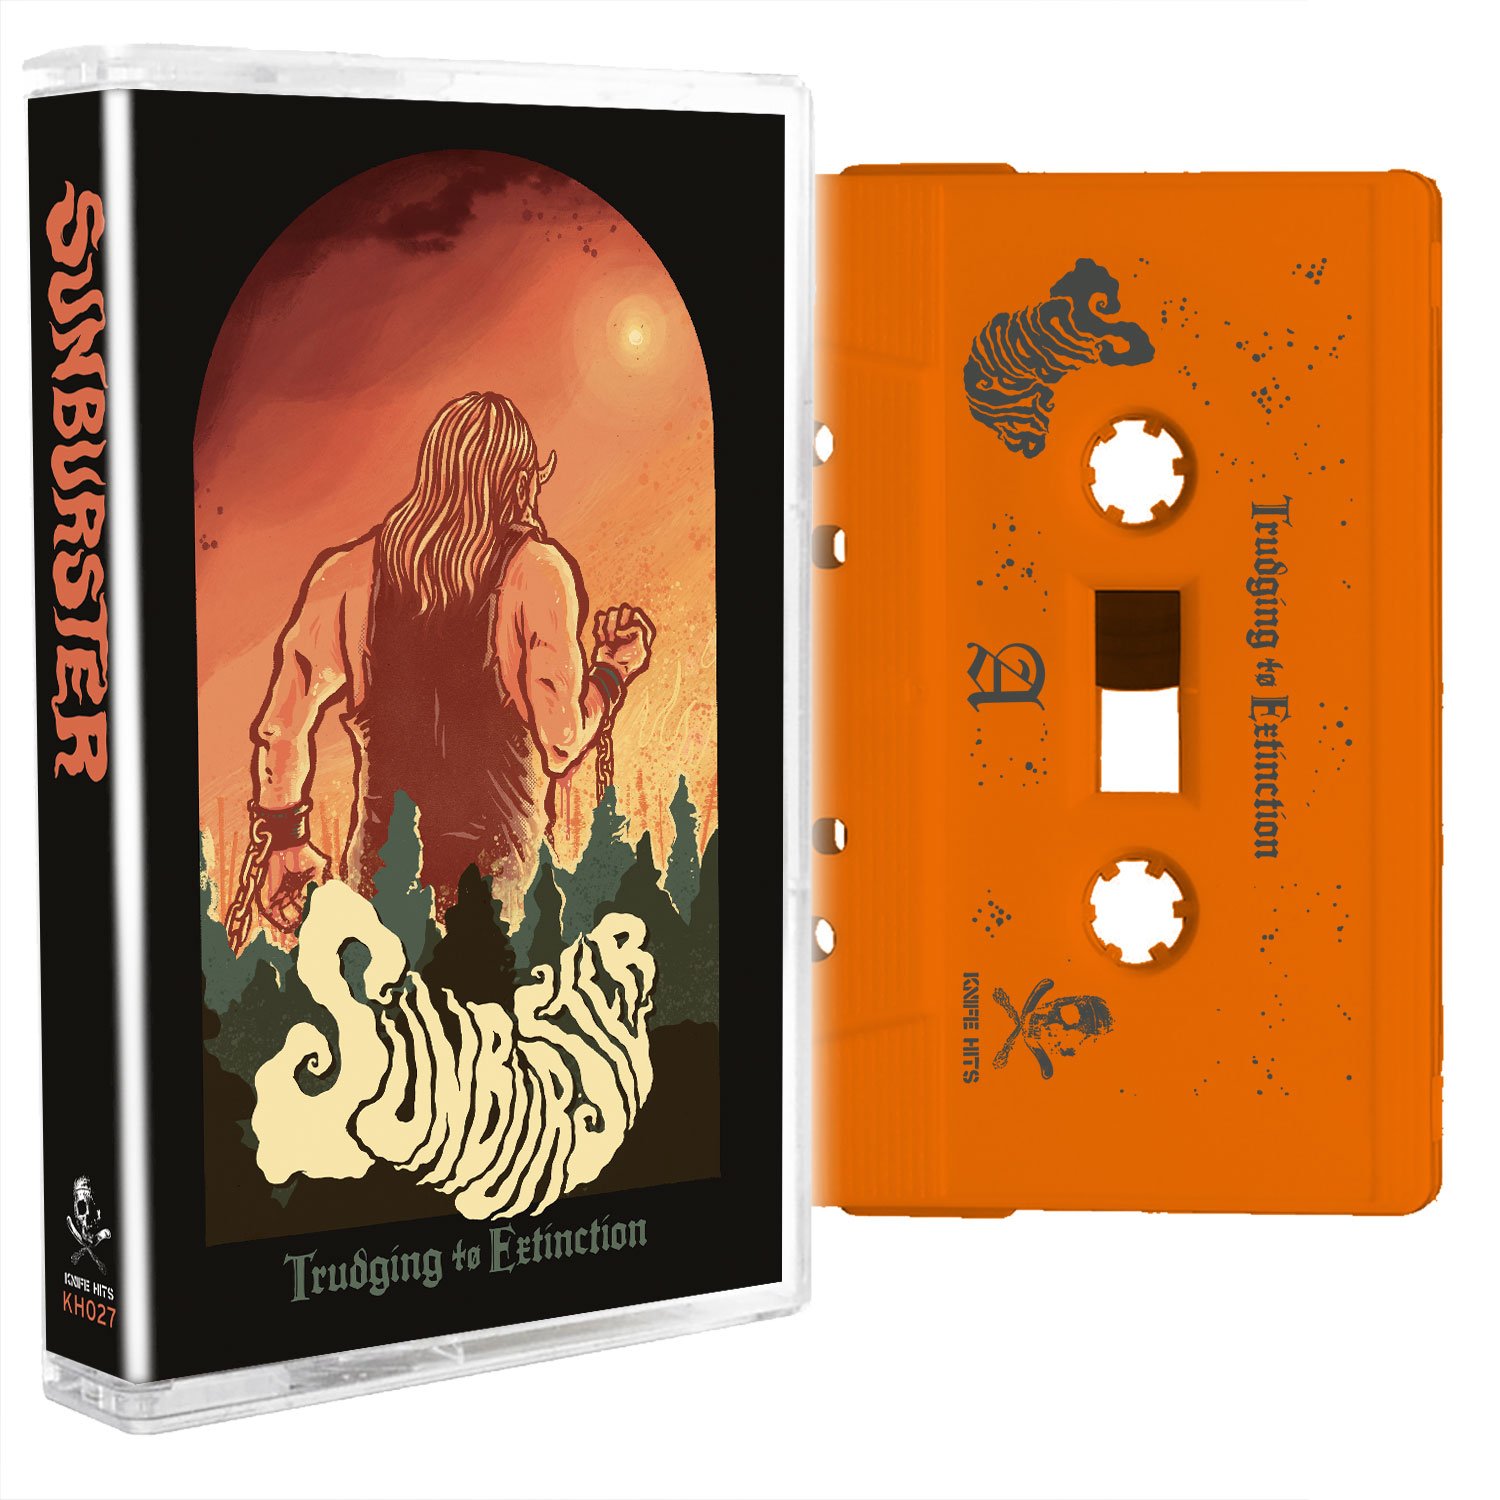 Sunburster - Trudging to Extinction cassette